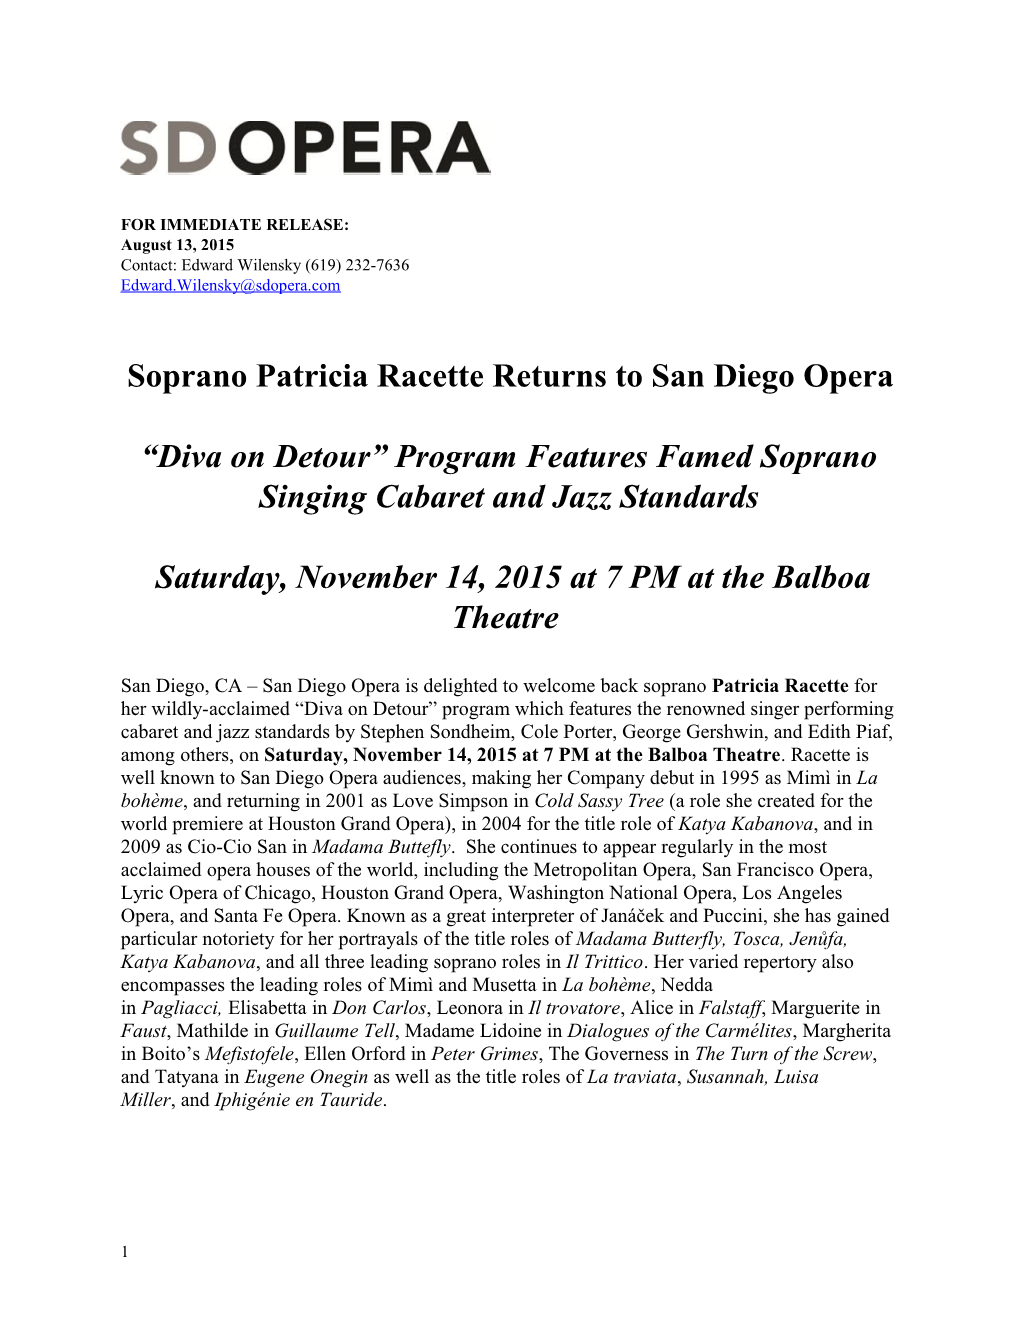 Soprano Patricia Racette Returns to San Diego Opera